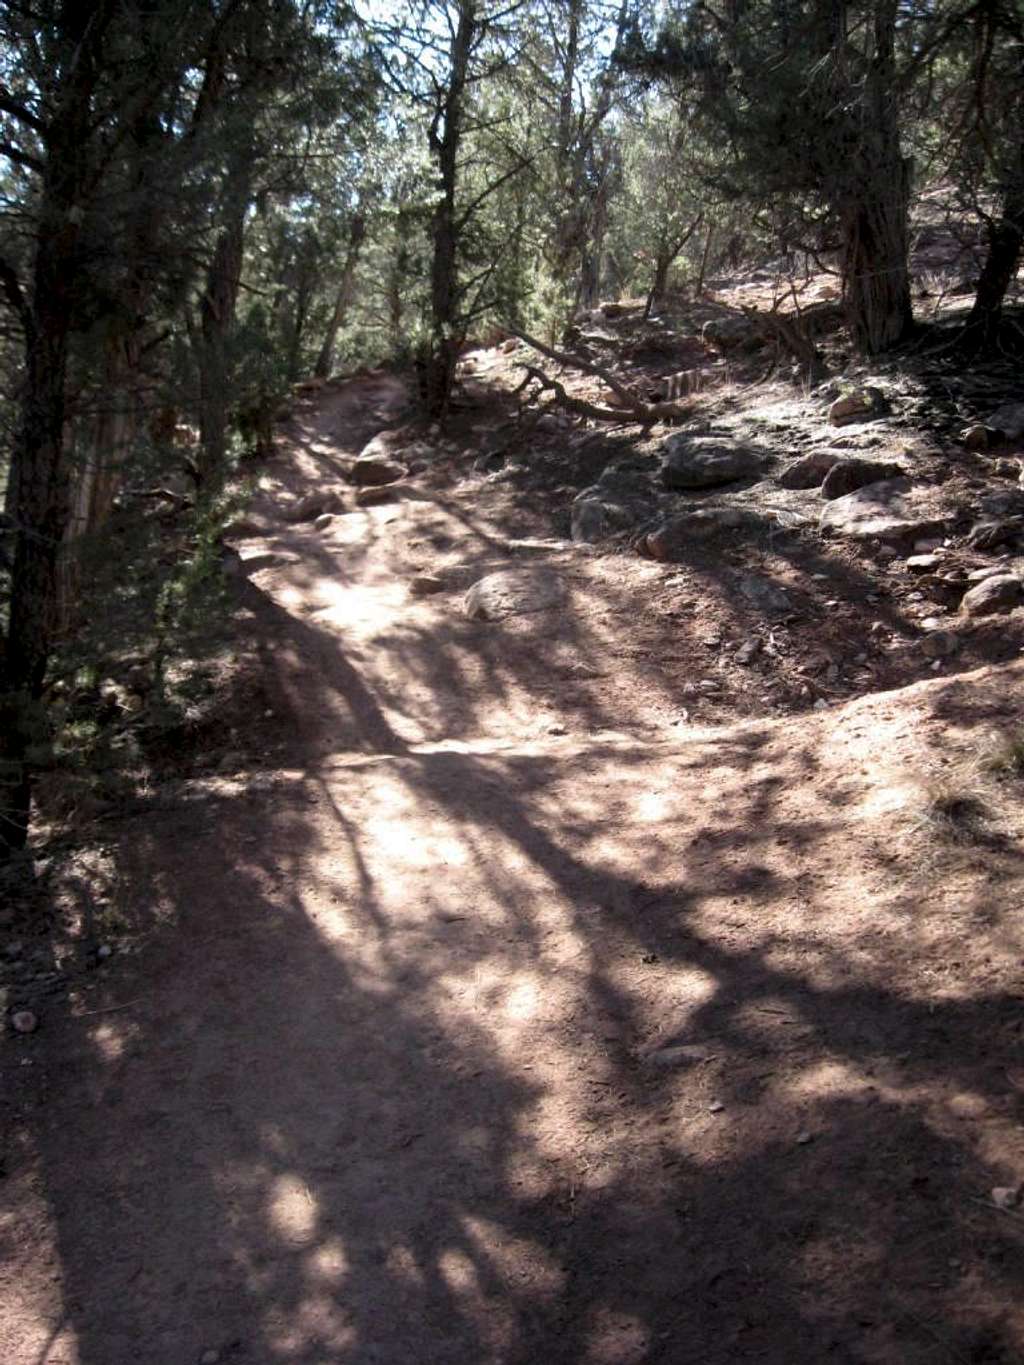 Beginning trail surface